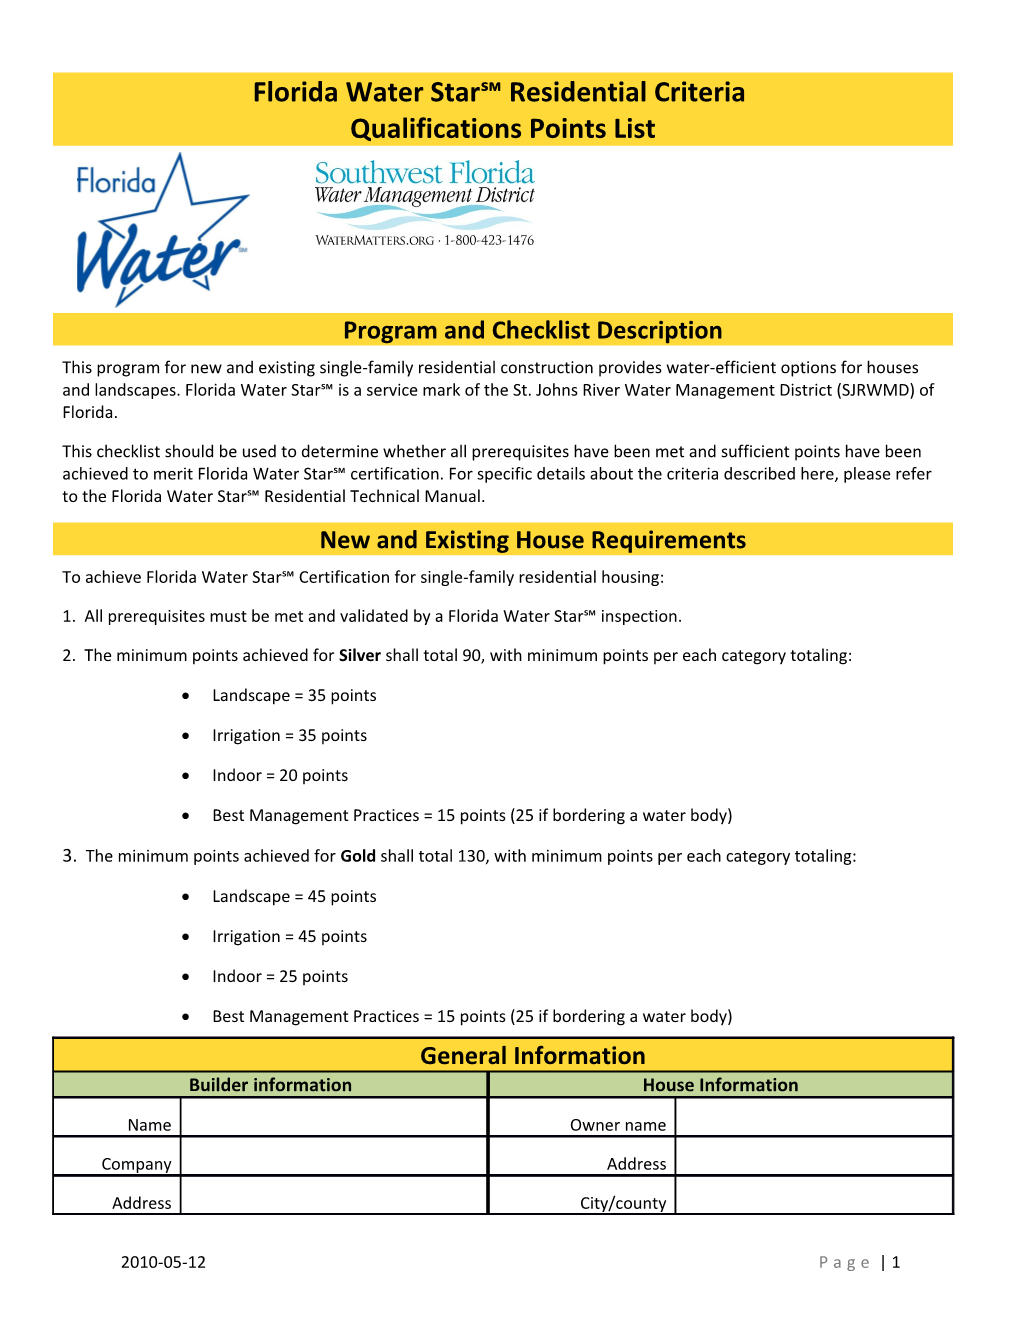 Program and Checklist Description